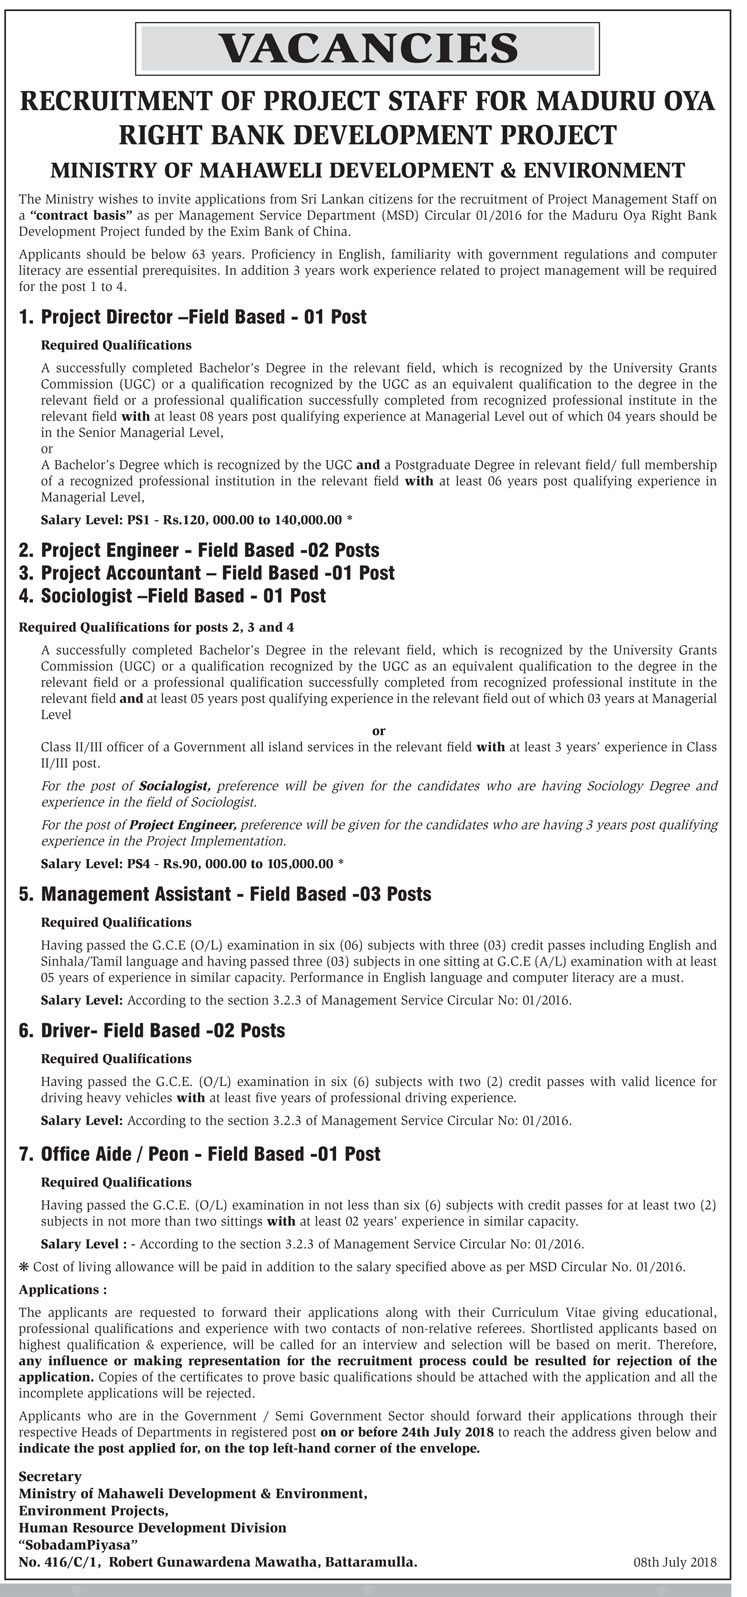 Management Assistant / Driver / Office Aide / Peon - Ministry of Mahaweli Development Jobs Vacancies